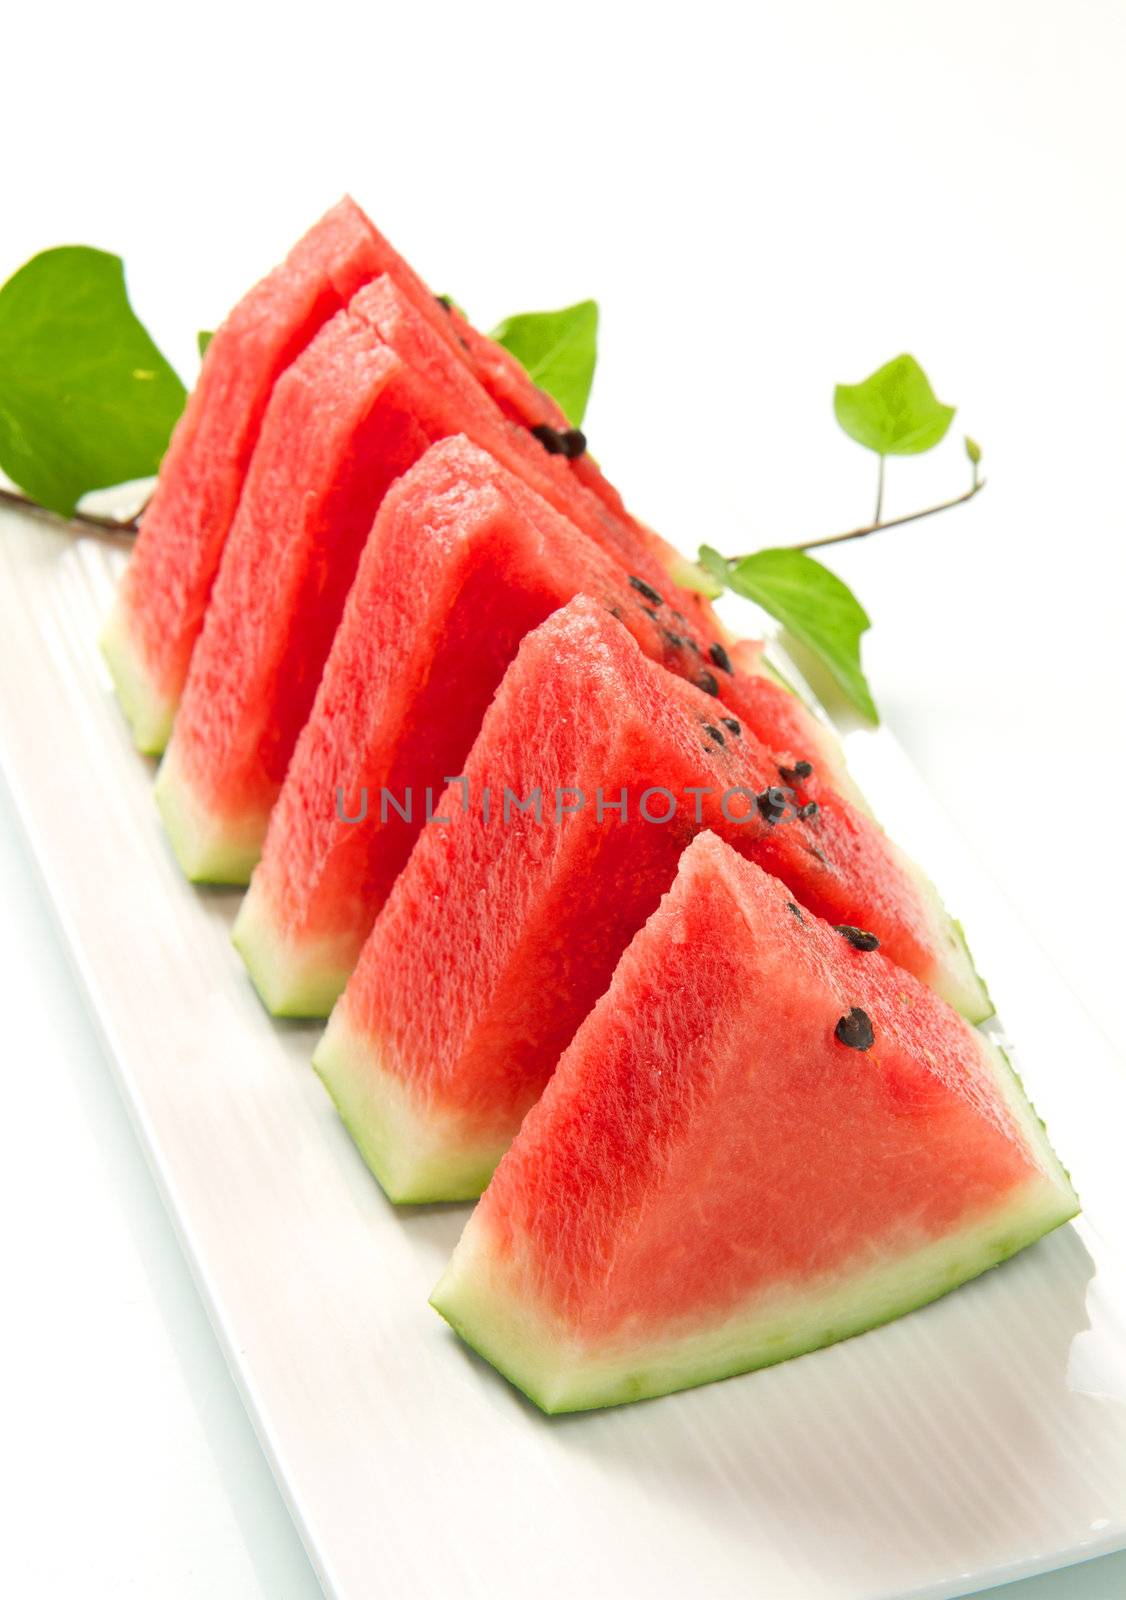 watermelon by lsantilli